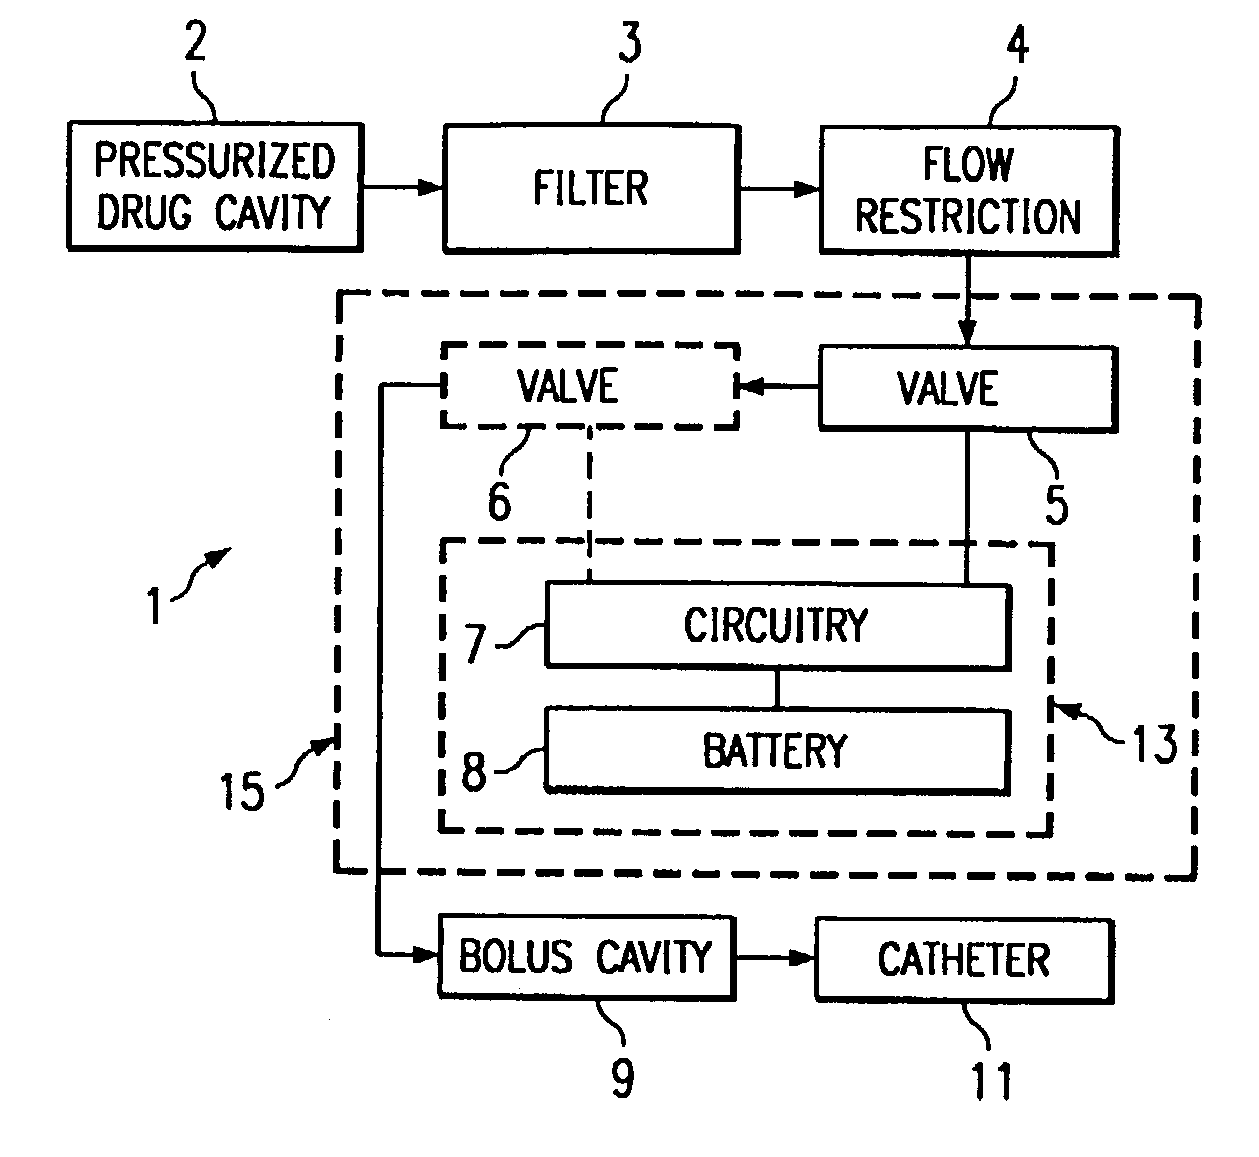 Programmable dose control module